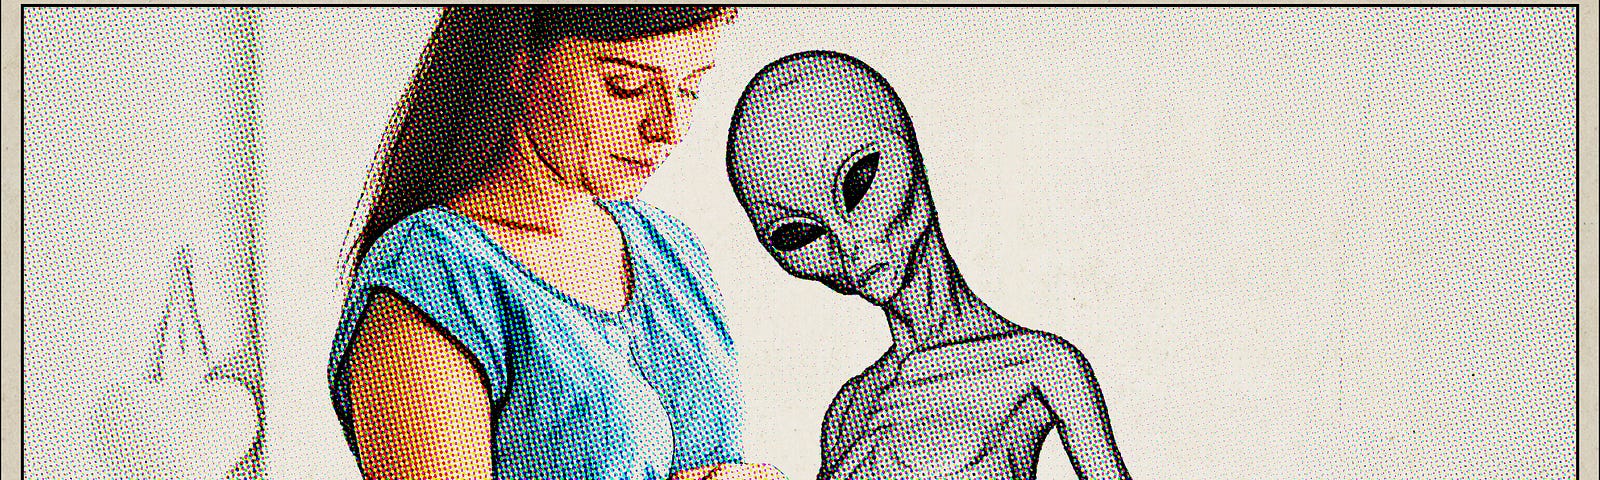 Alien observes pregnant mother